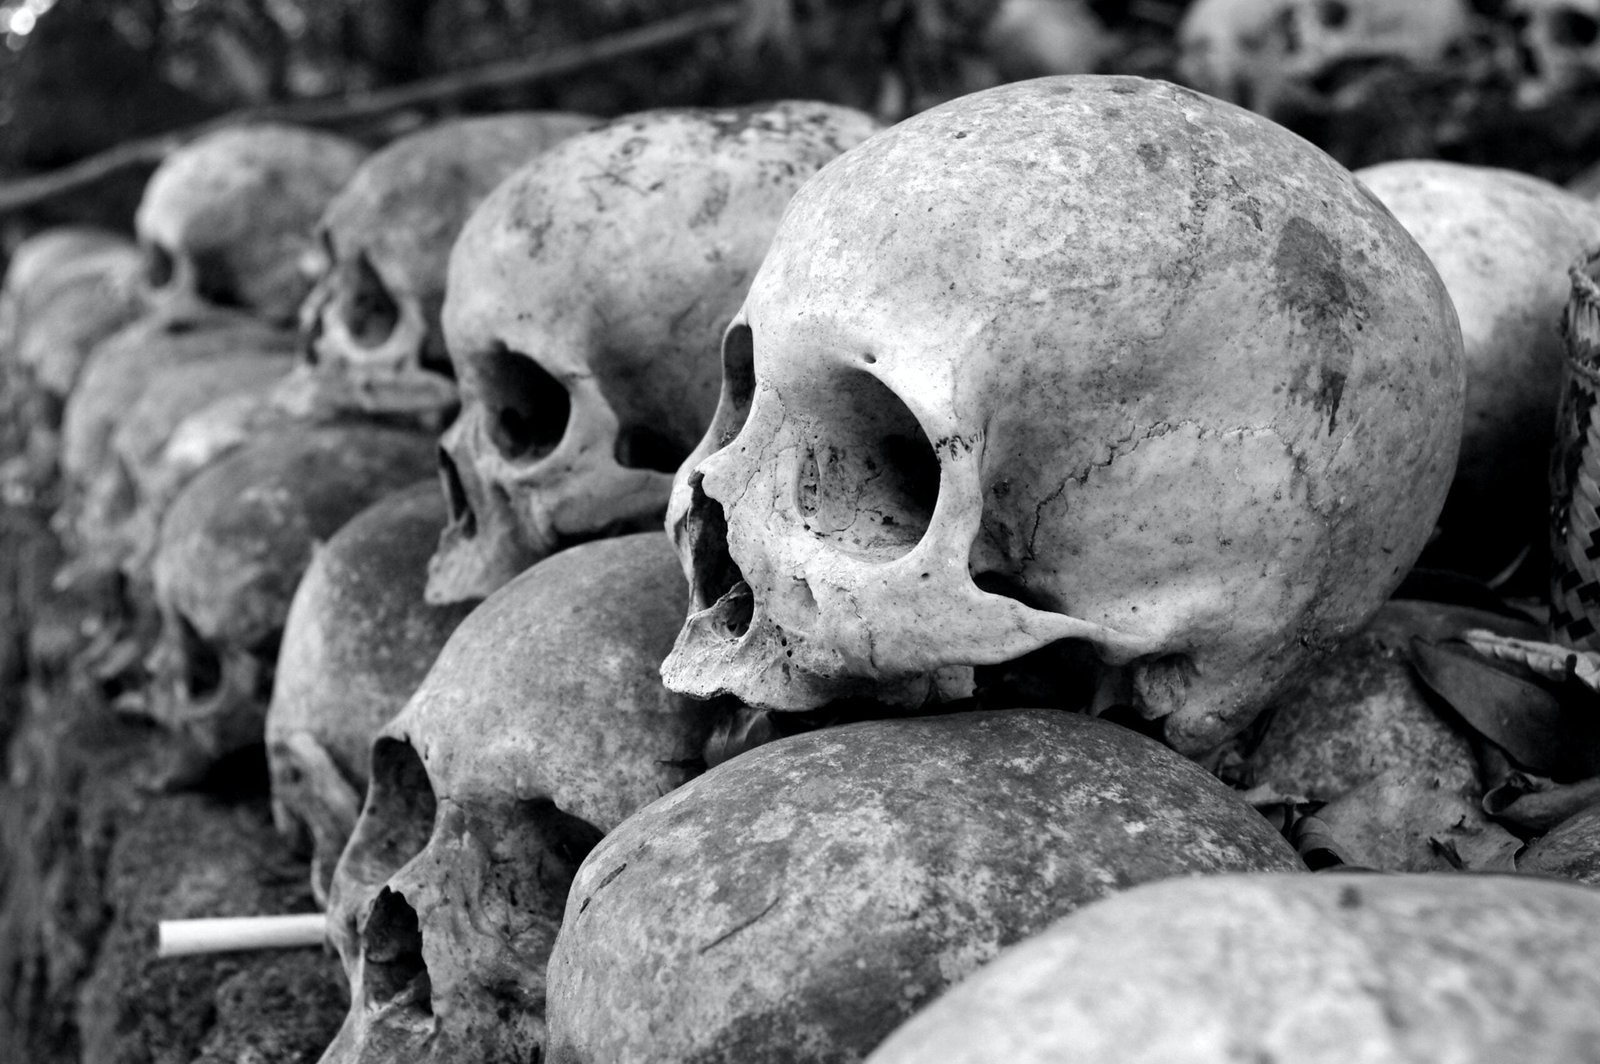 A row of human skulls symbolizing death